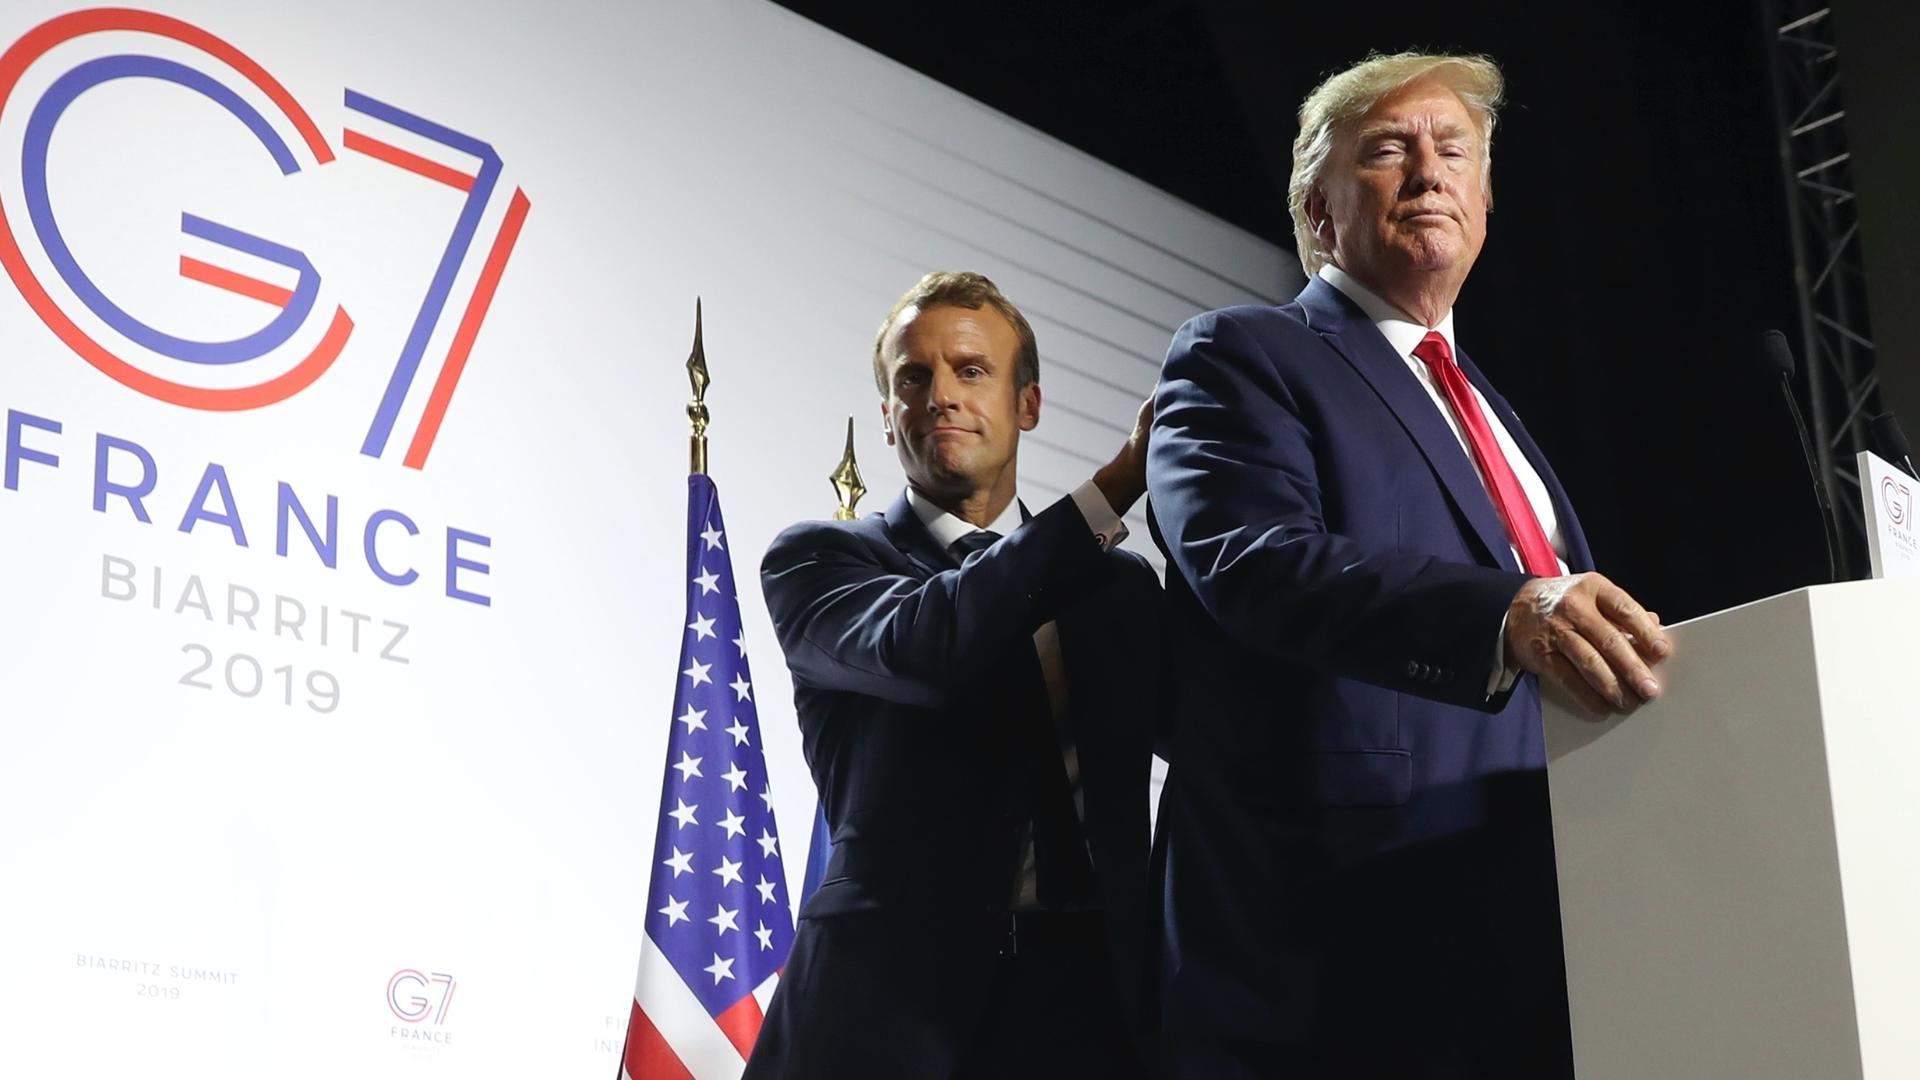 Macron and Trump stand near a podium